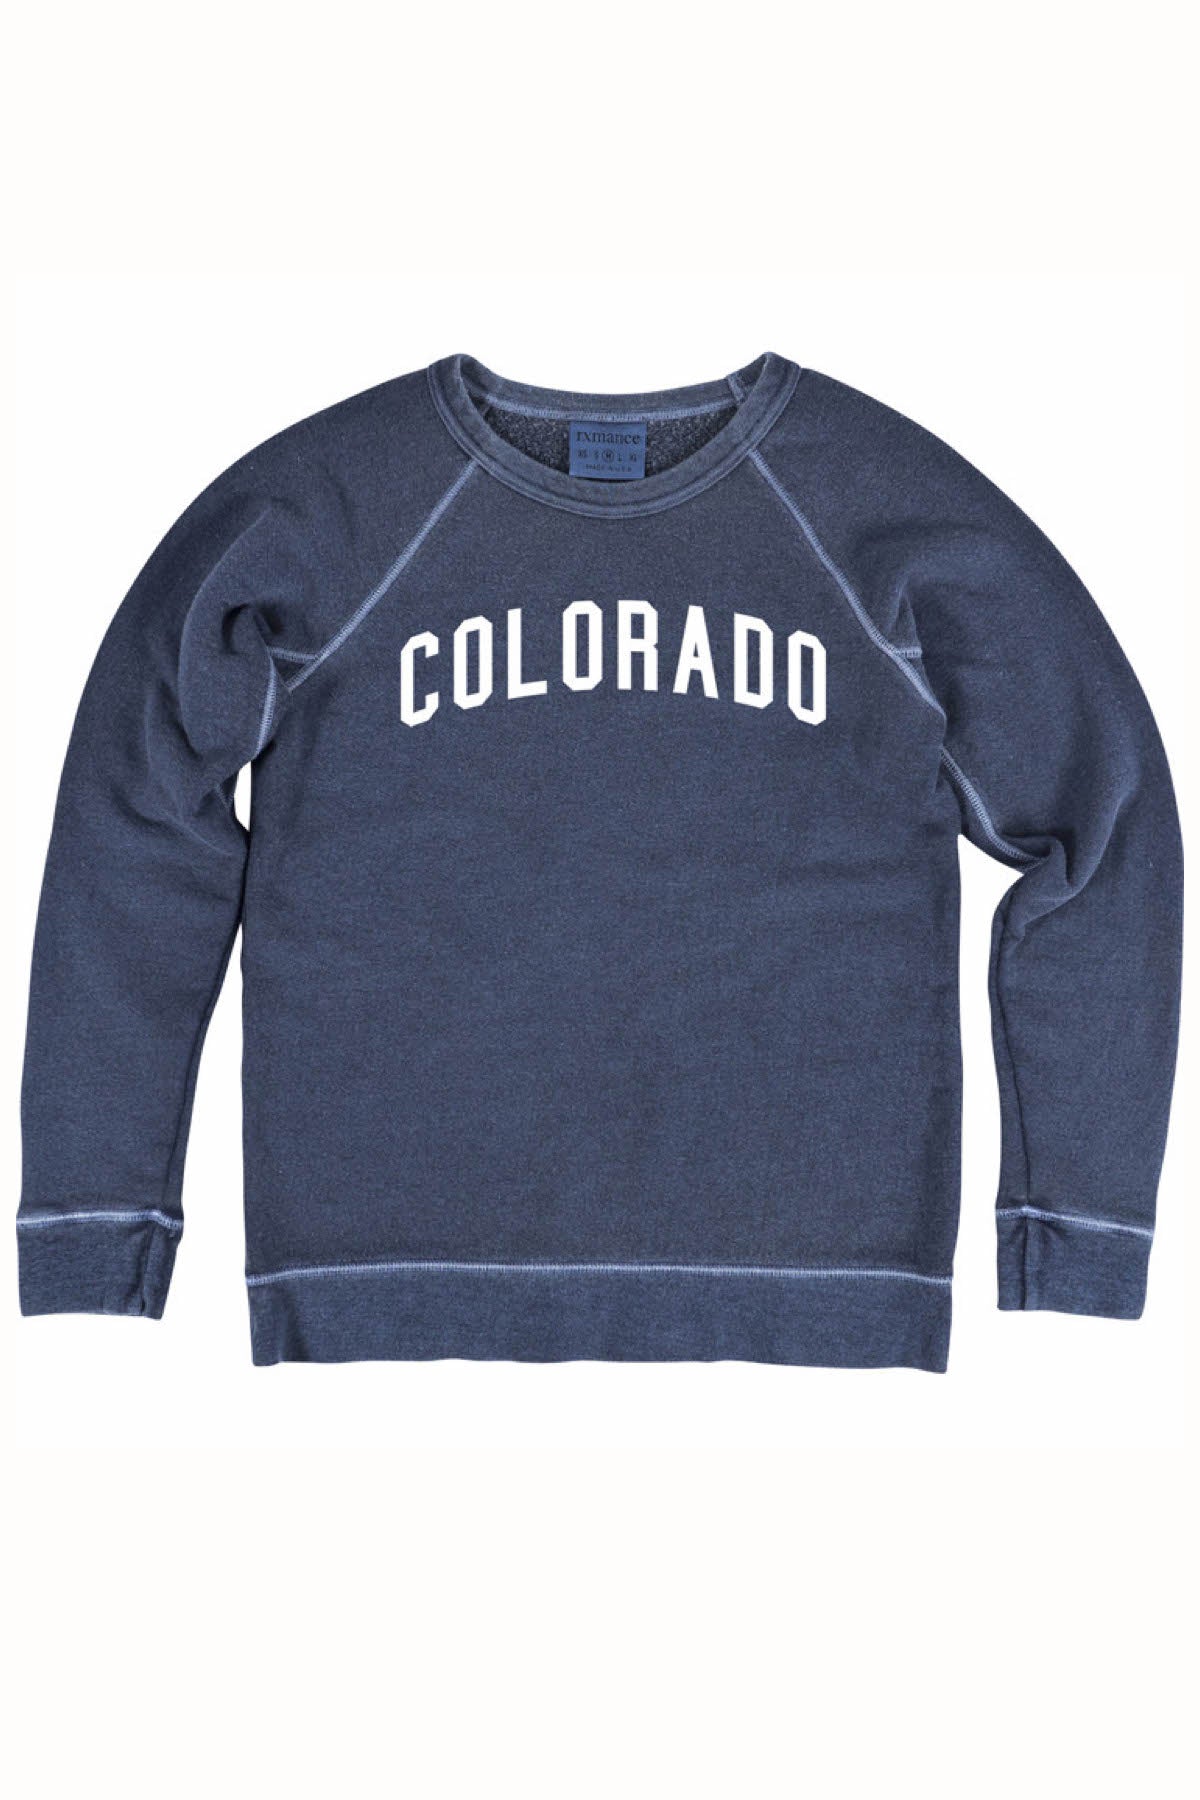 Rxmance Unisex Navy Blue Colorado Sweatshirt